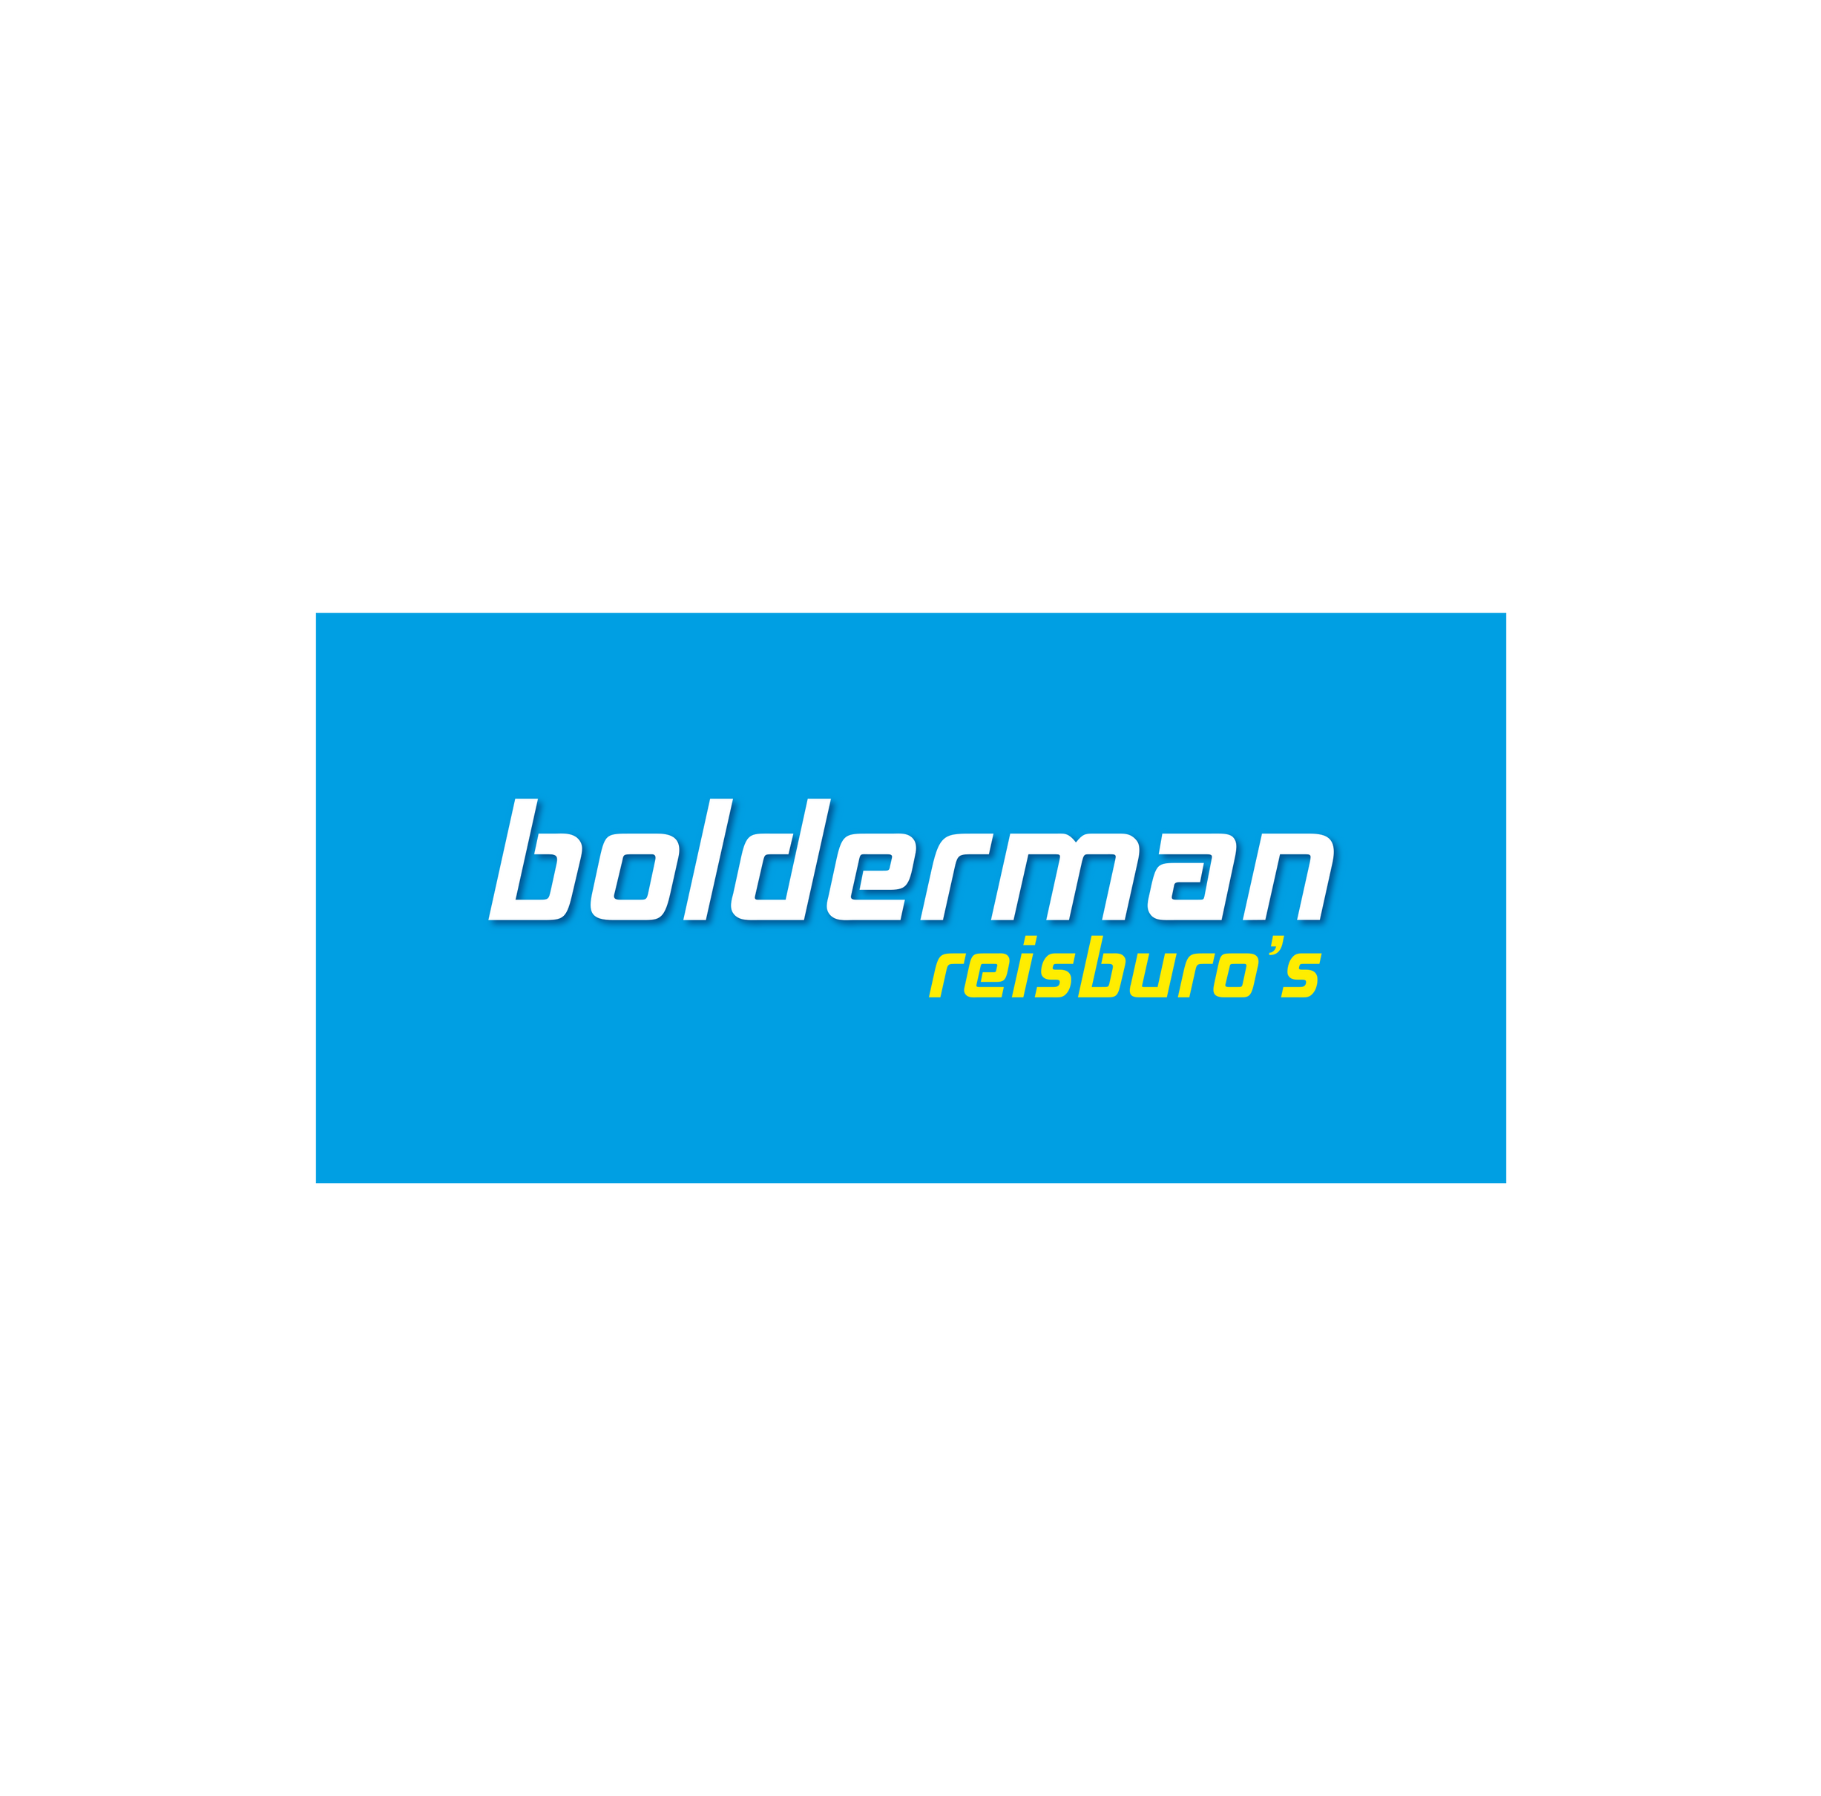 Bolderman reisburo’s